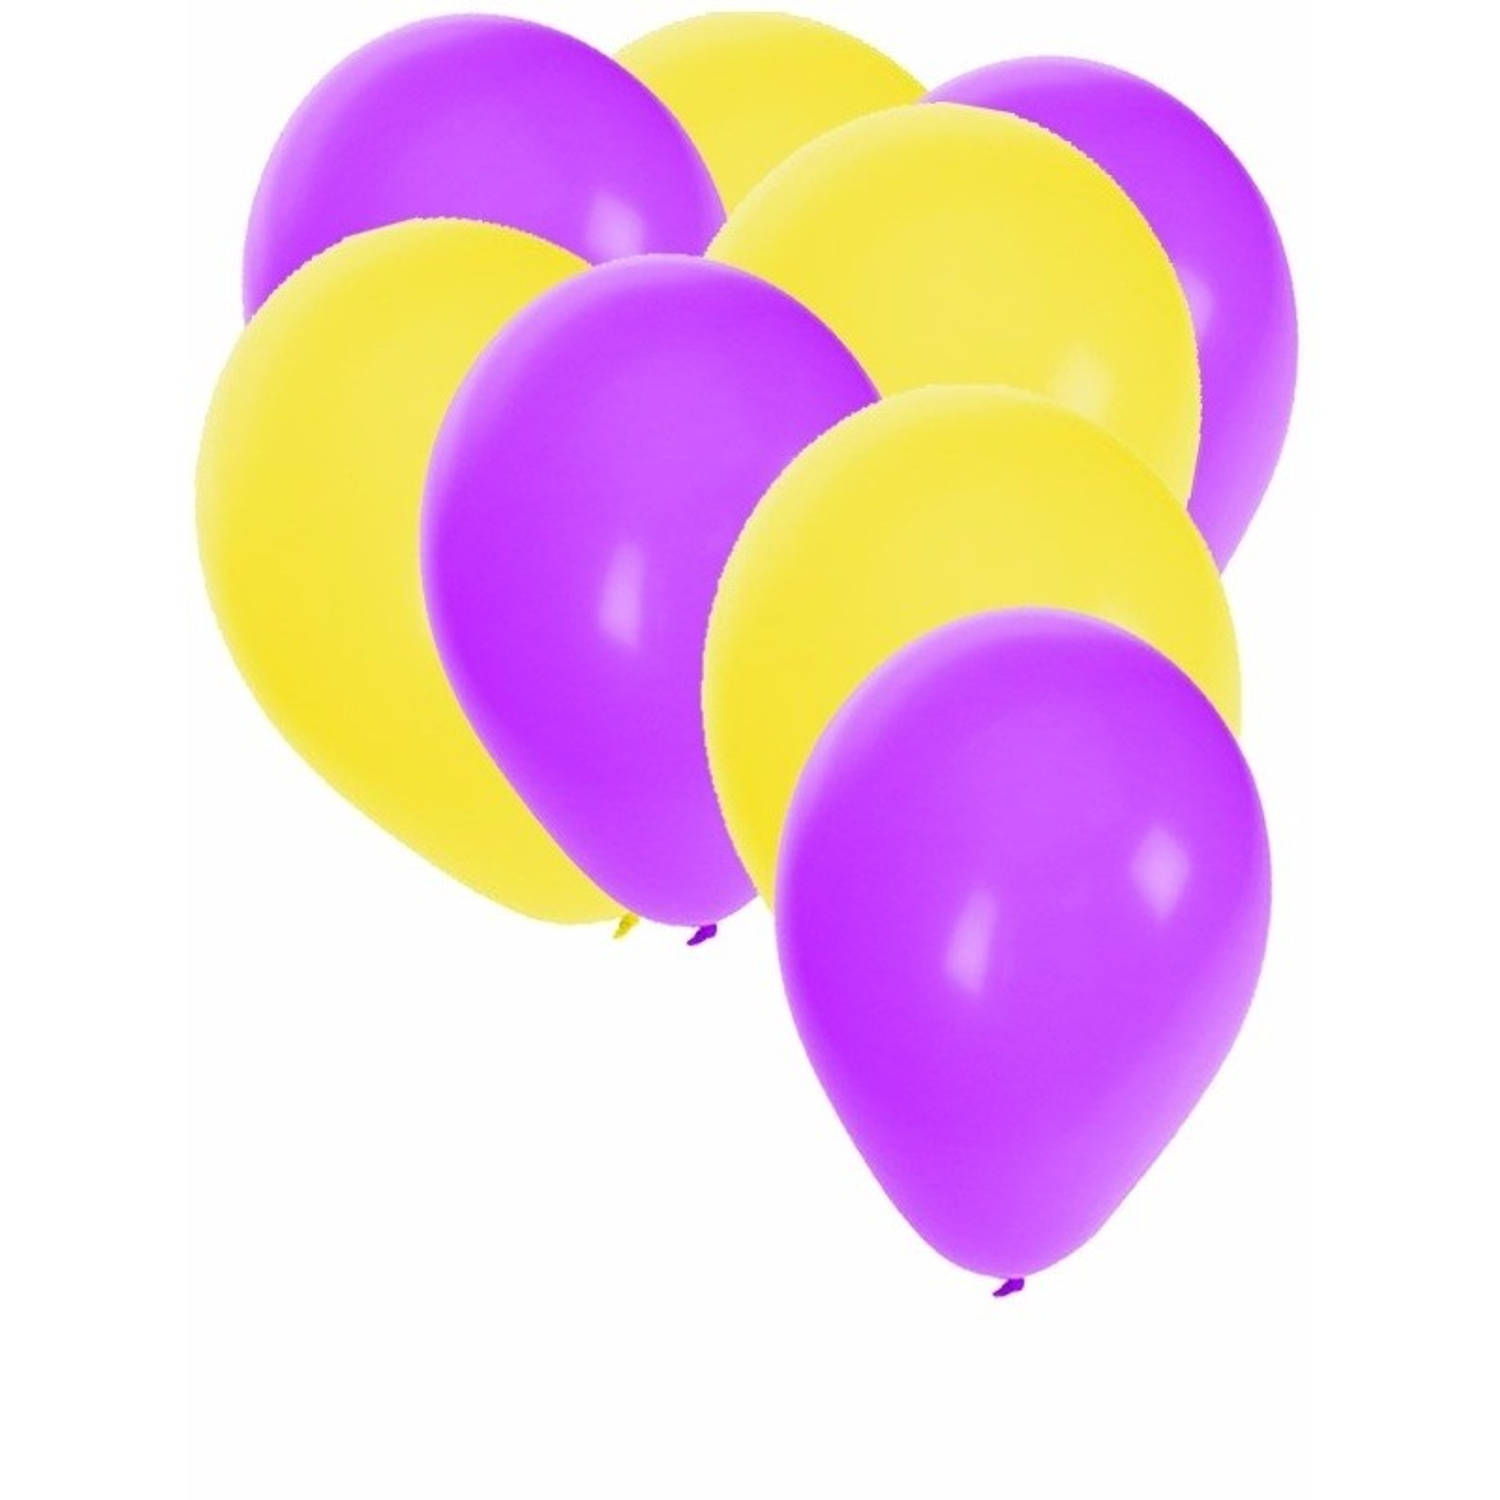 Paarse en gele ballonnen 30 stuks - Ballonnen